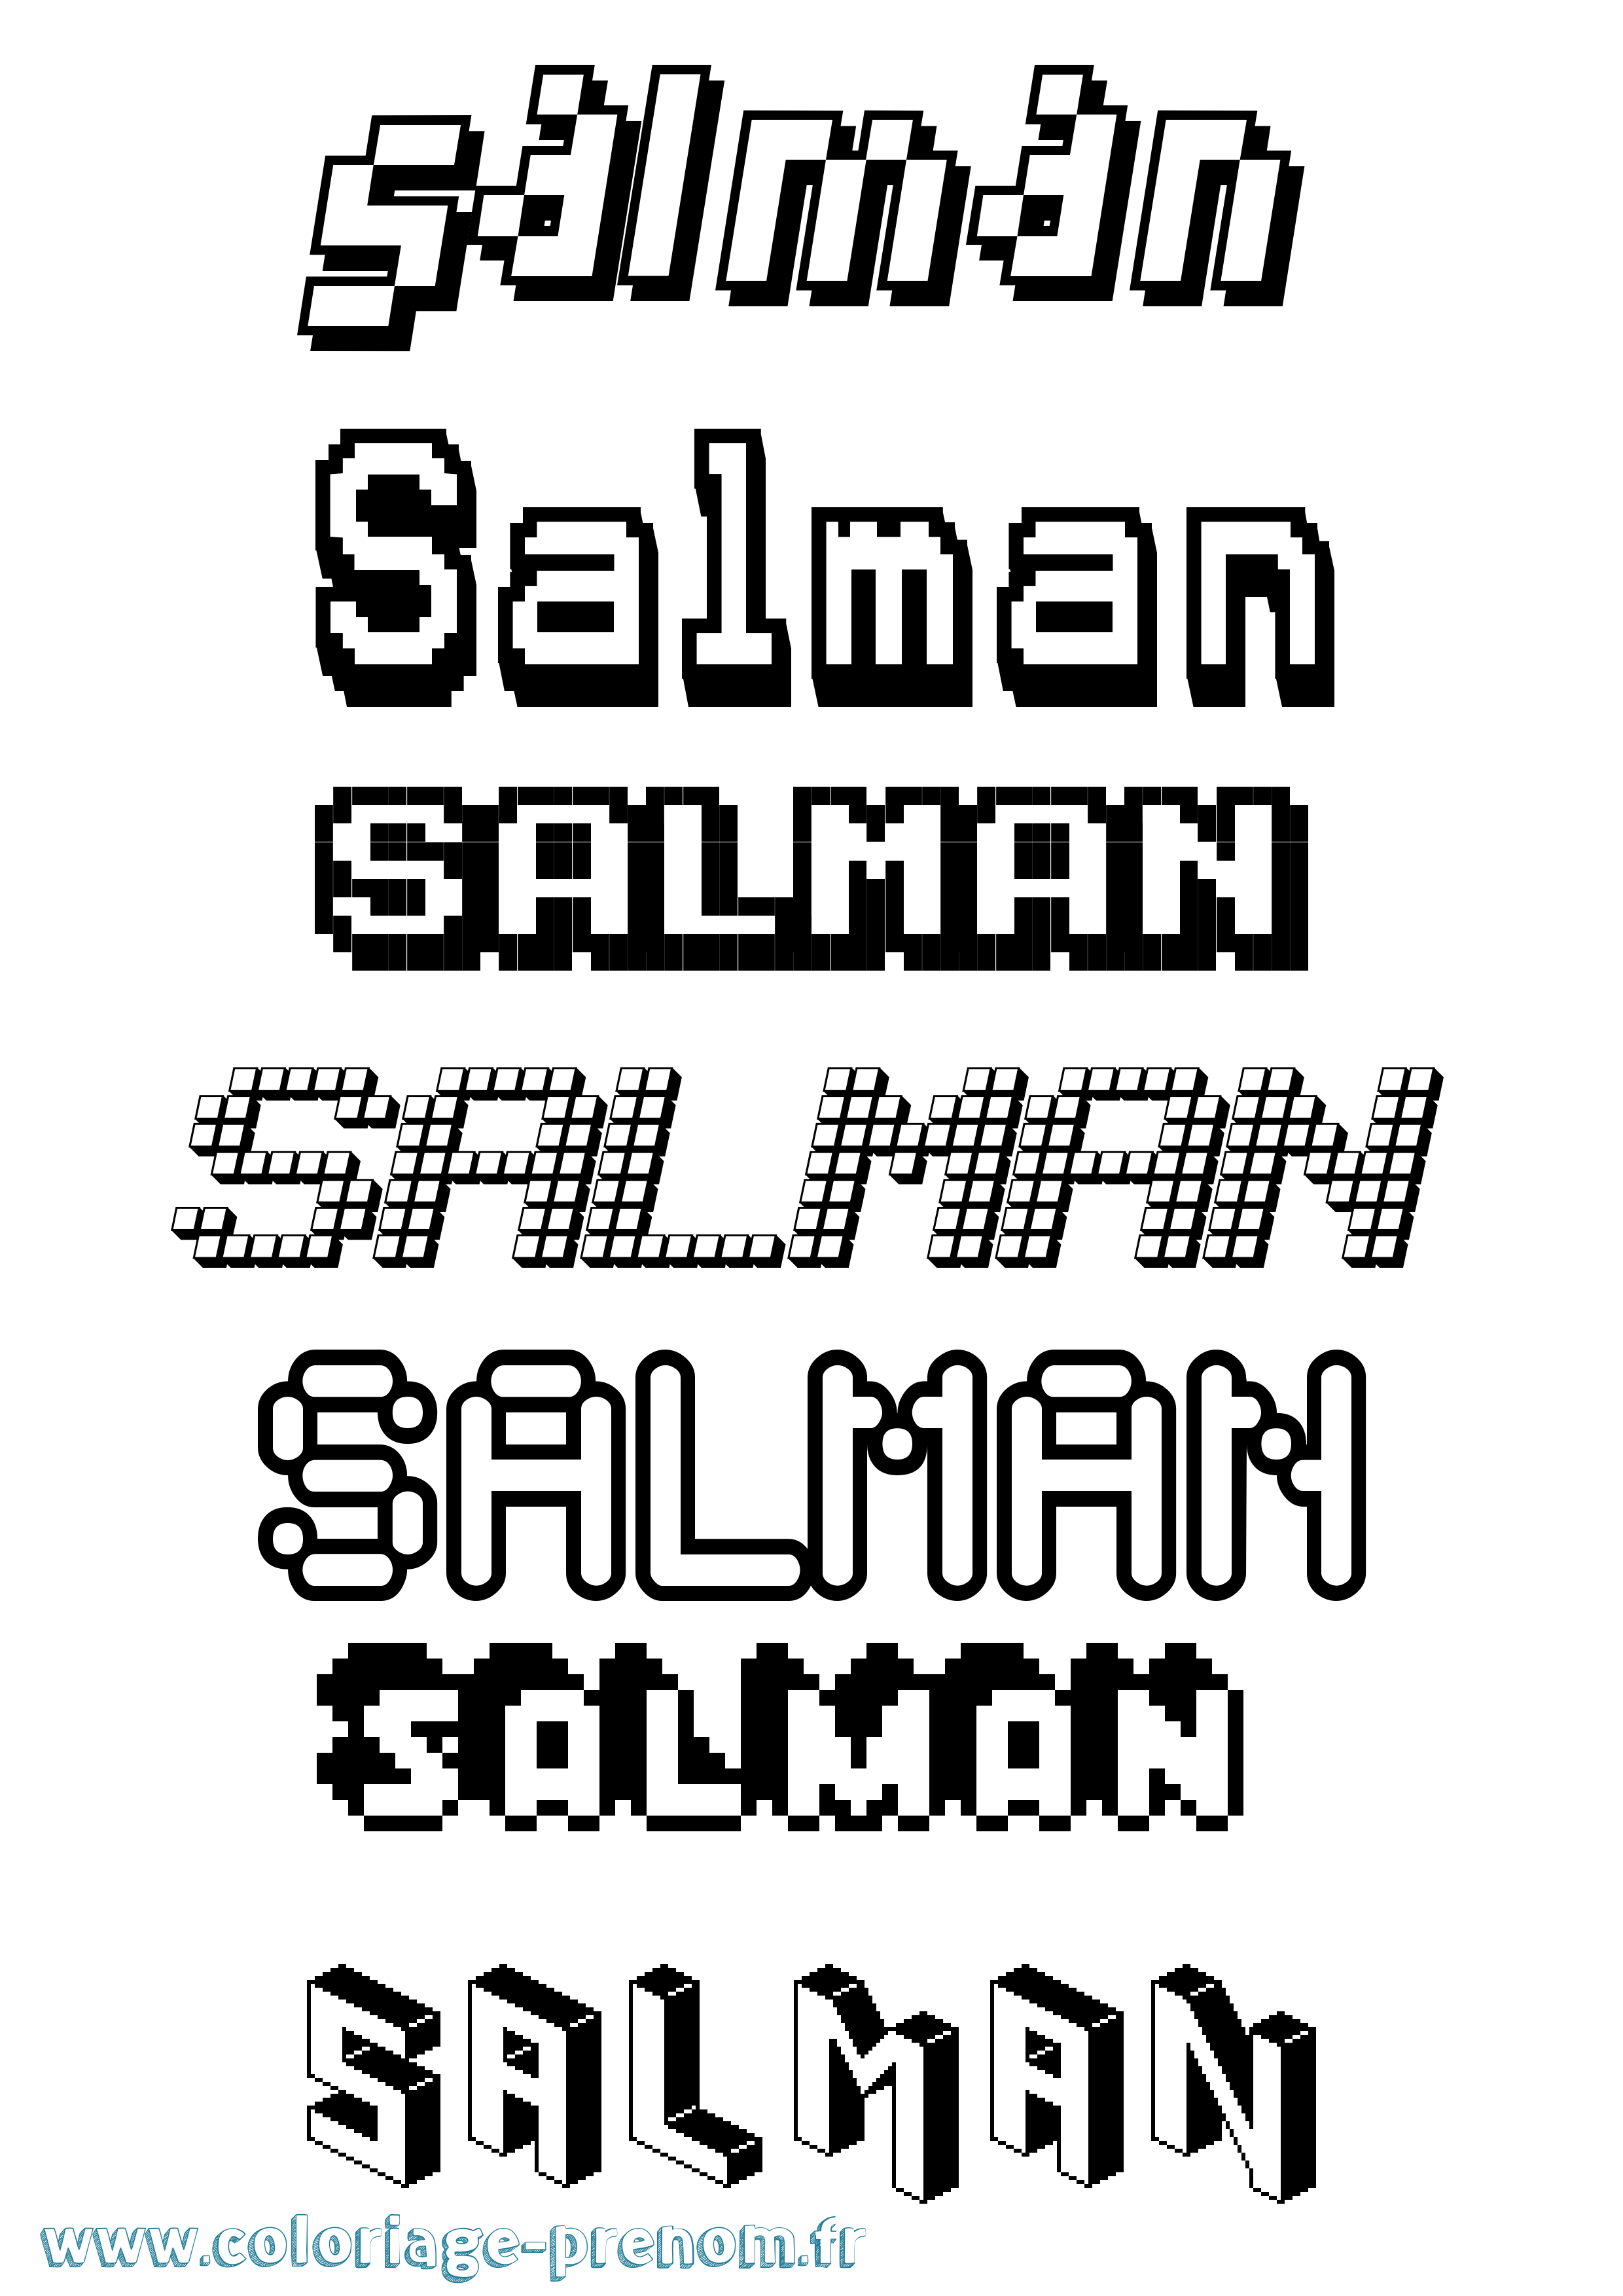 Coloriage prénom Salman Pixel